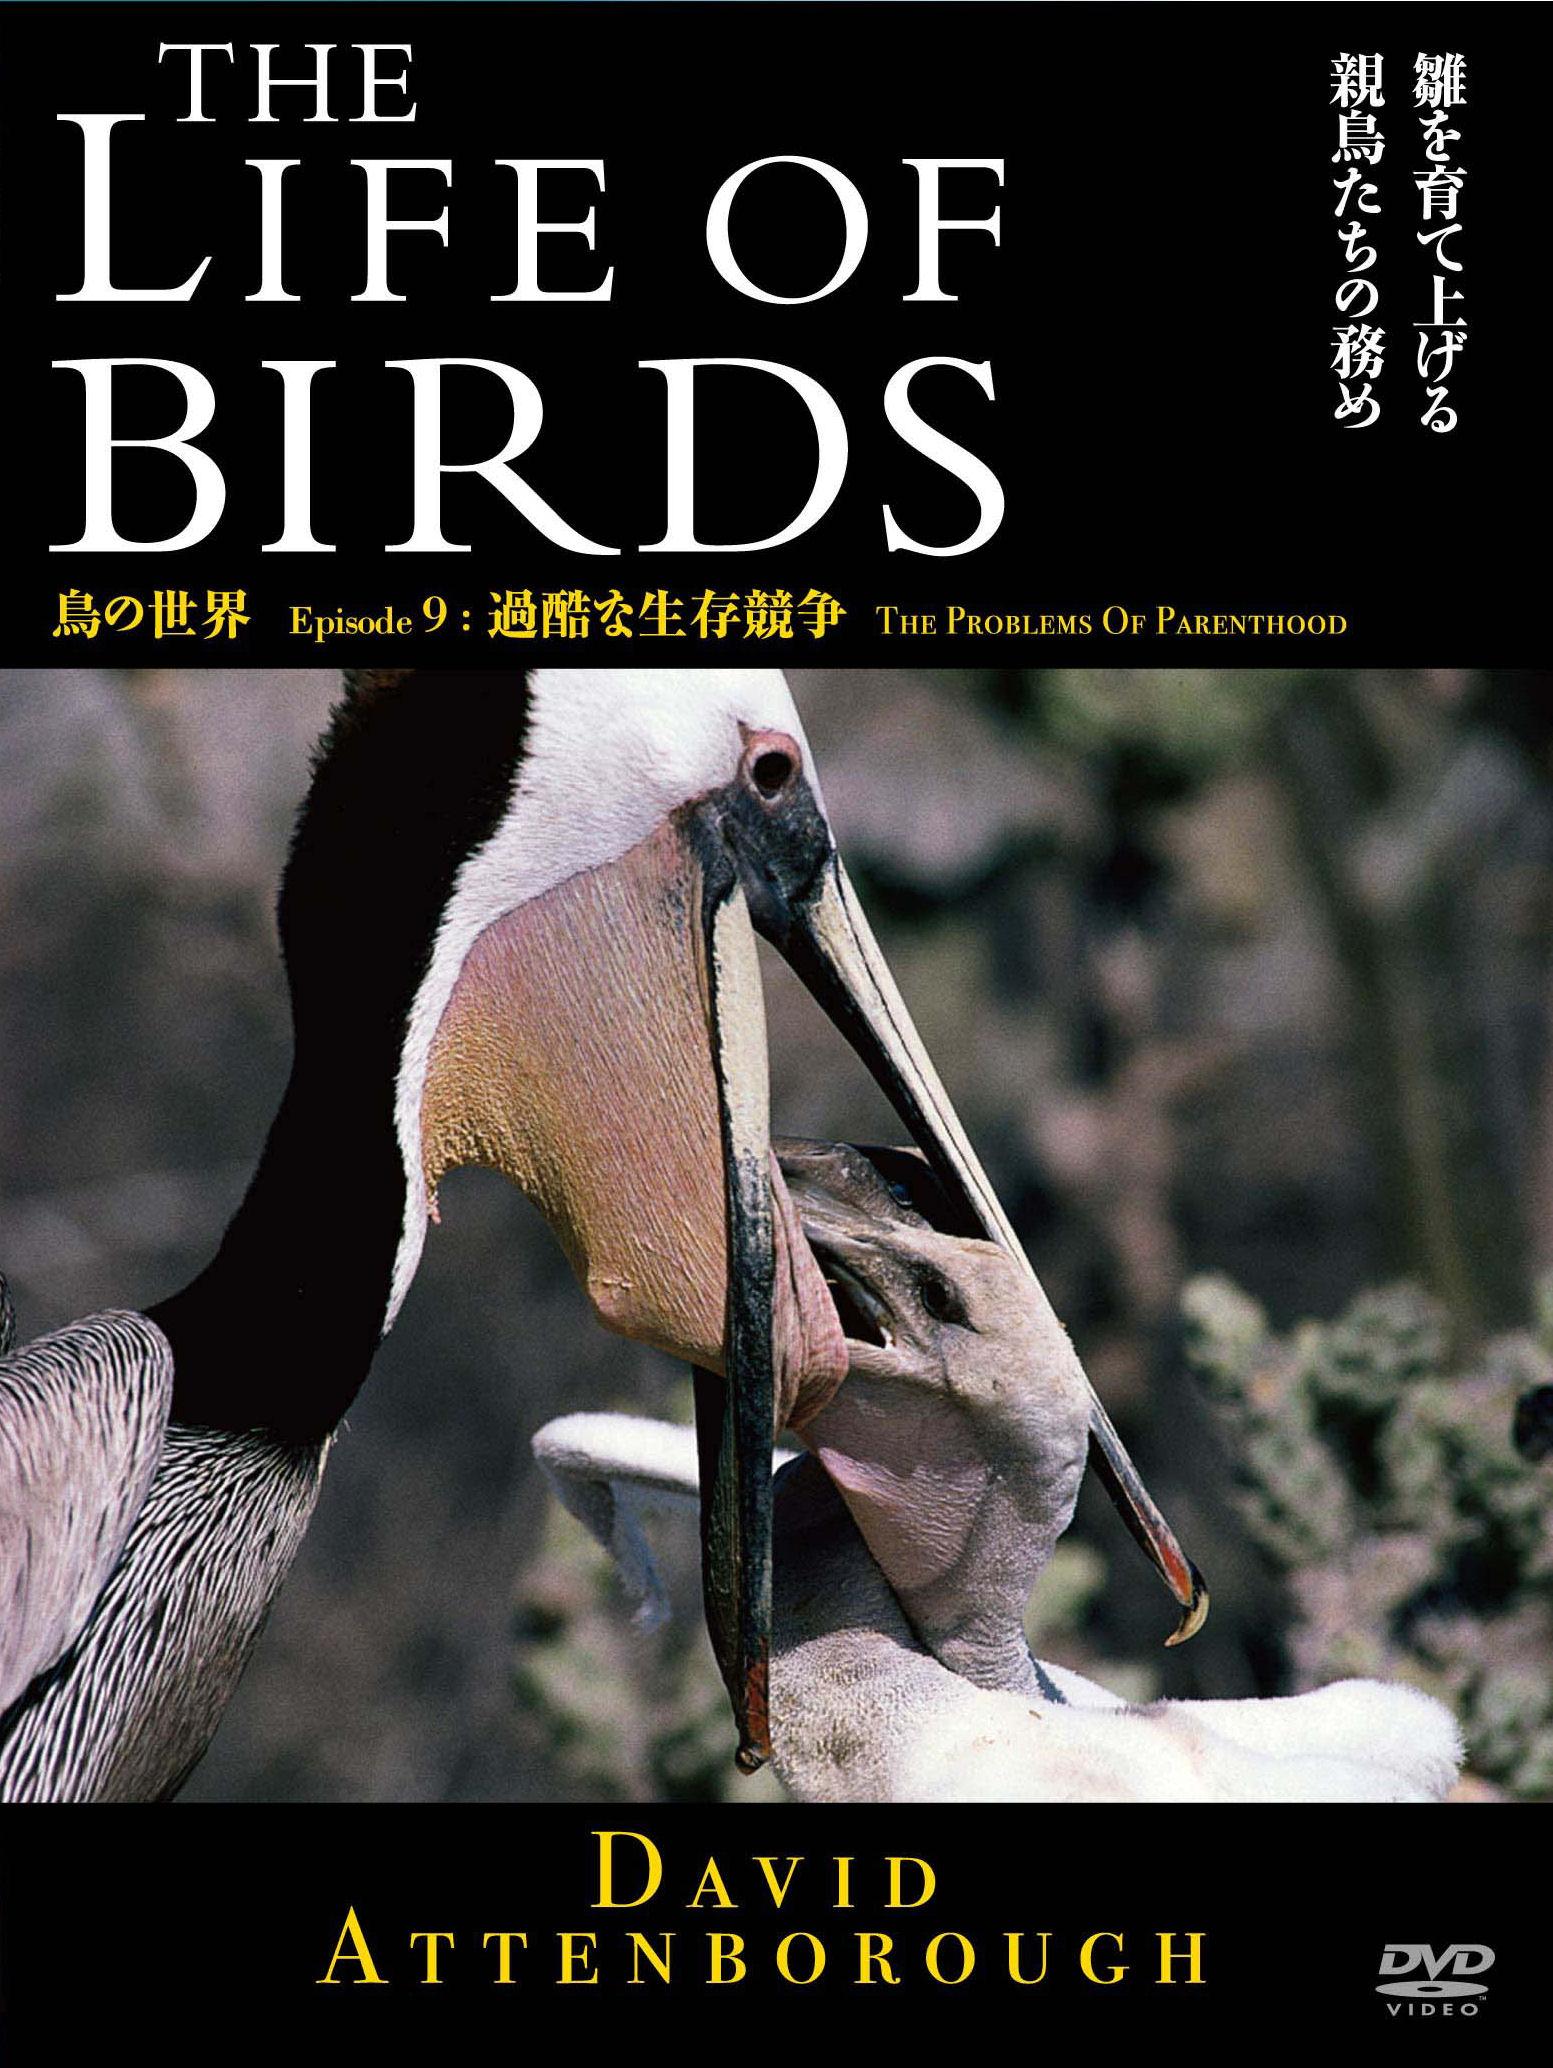 THE LIFE OF BIRDS 鳥の世界 過酷な生存競争 のサムネイル画像